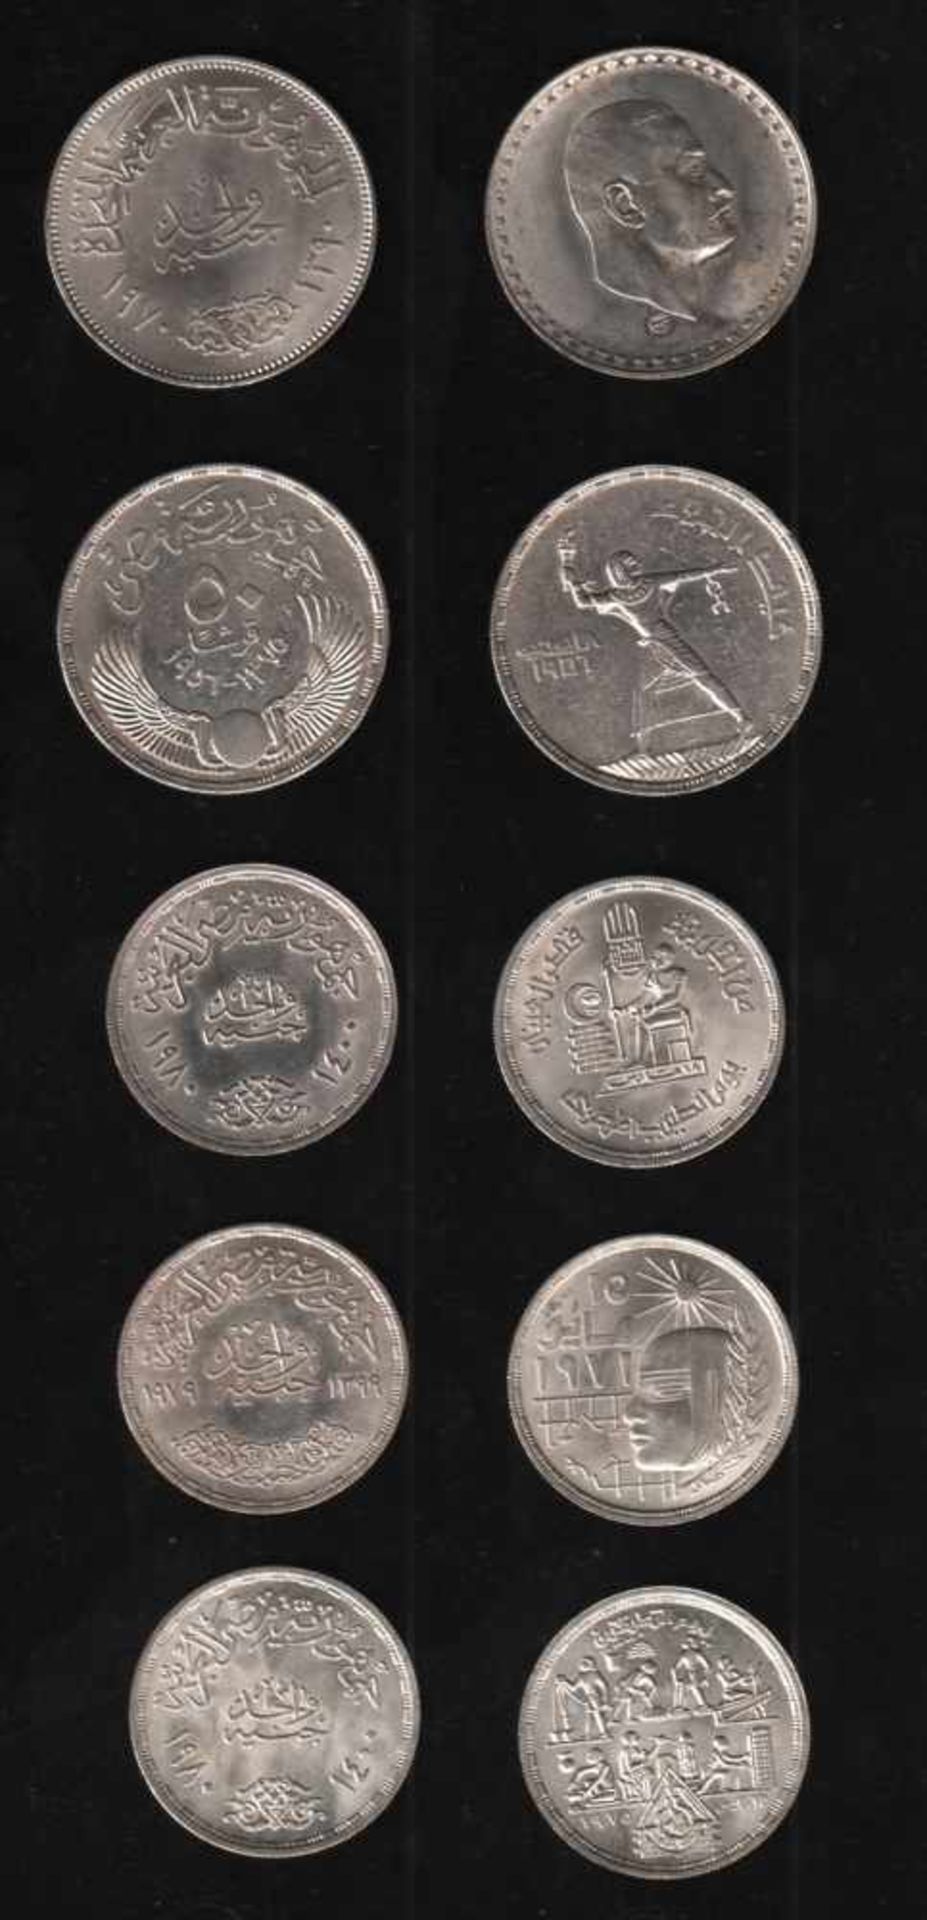 Ägypten. Silbermünze (900 / 1000). 50 Piaster. Abzug der britischen Truppen am 18. 6. 1956.